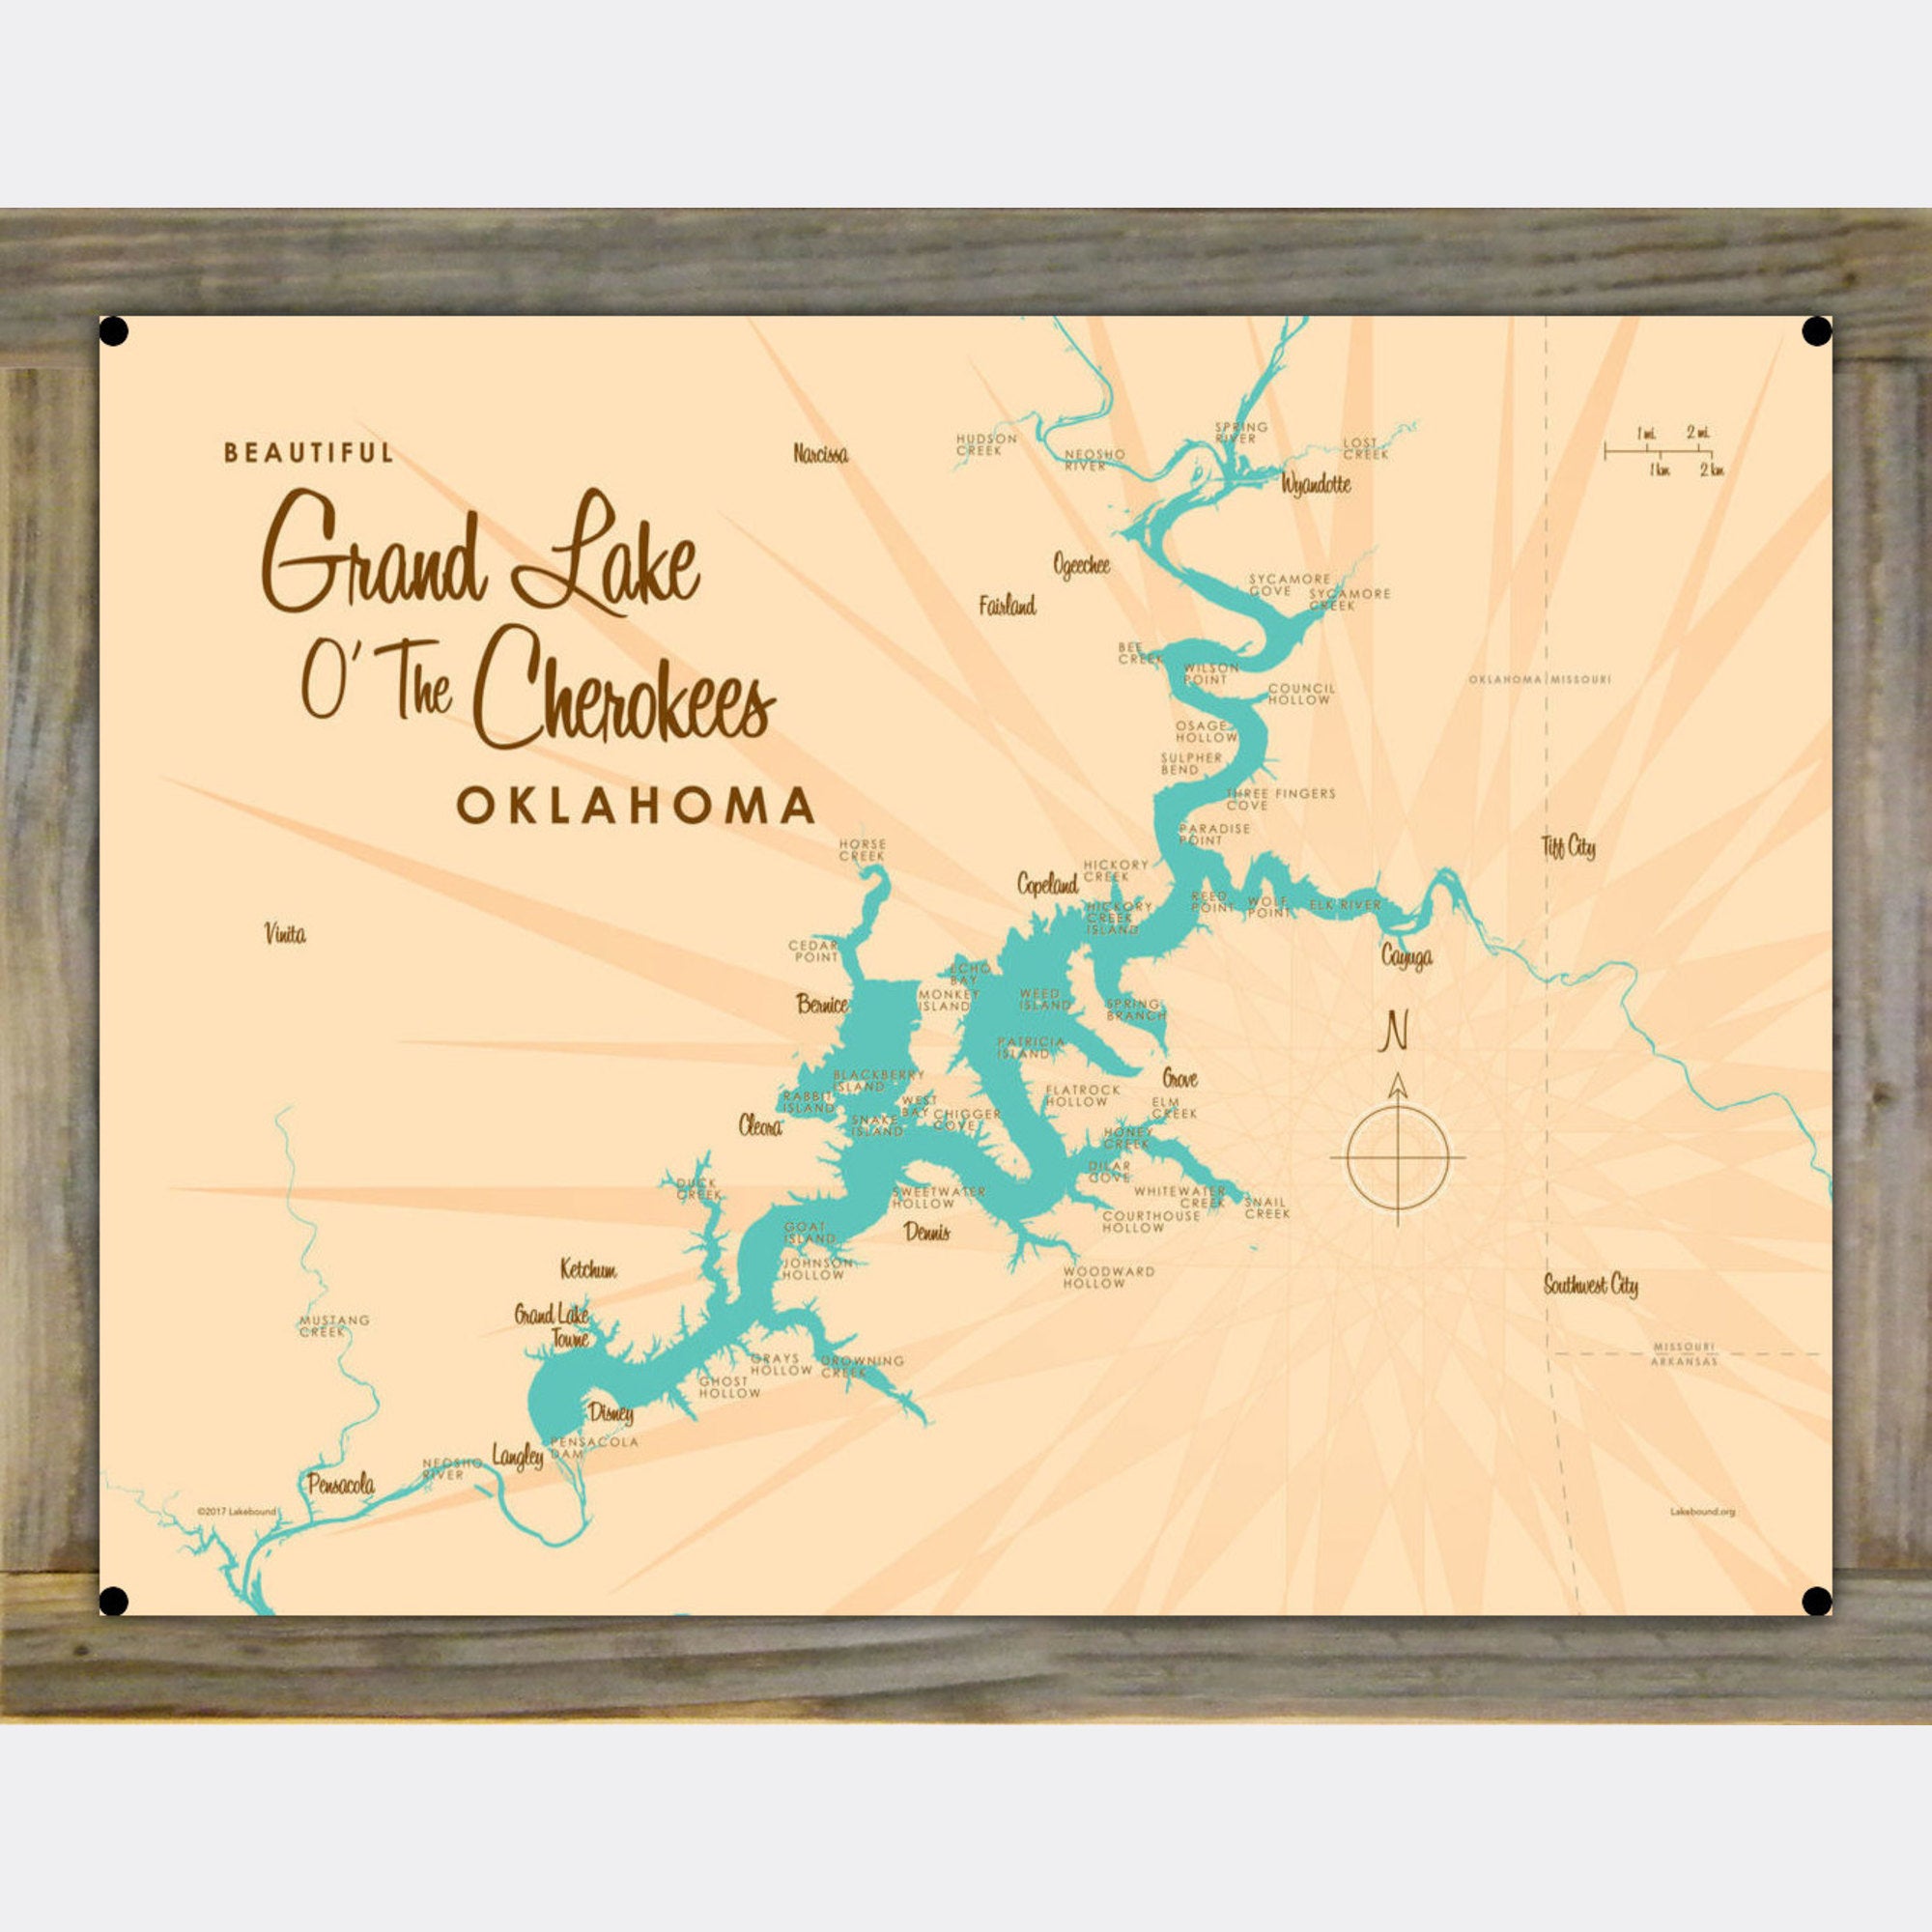 Grand Lake O' The Cherokees Oklahoma, Wood-Mounted Metal Sign Map Art